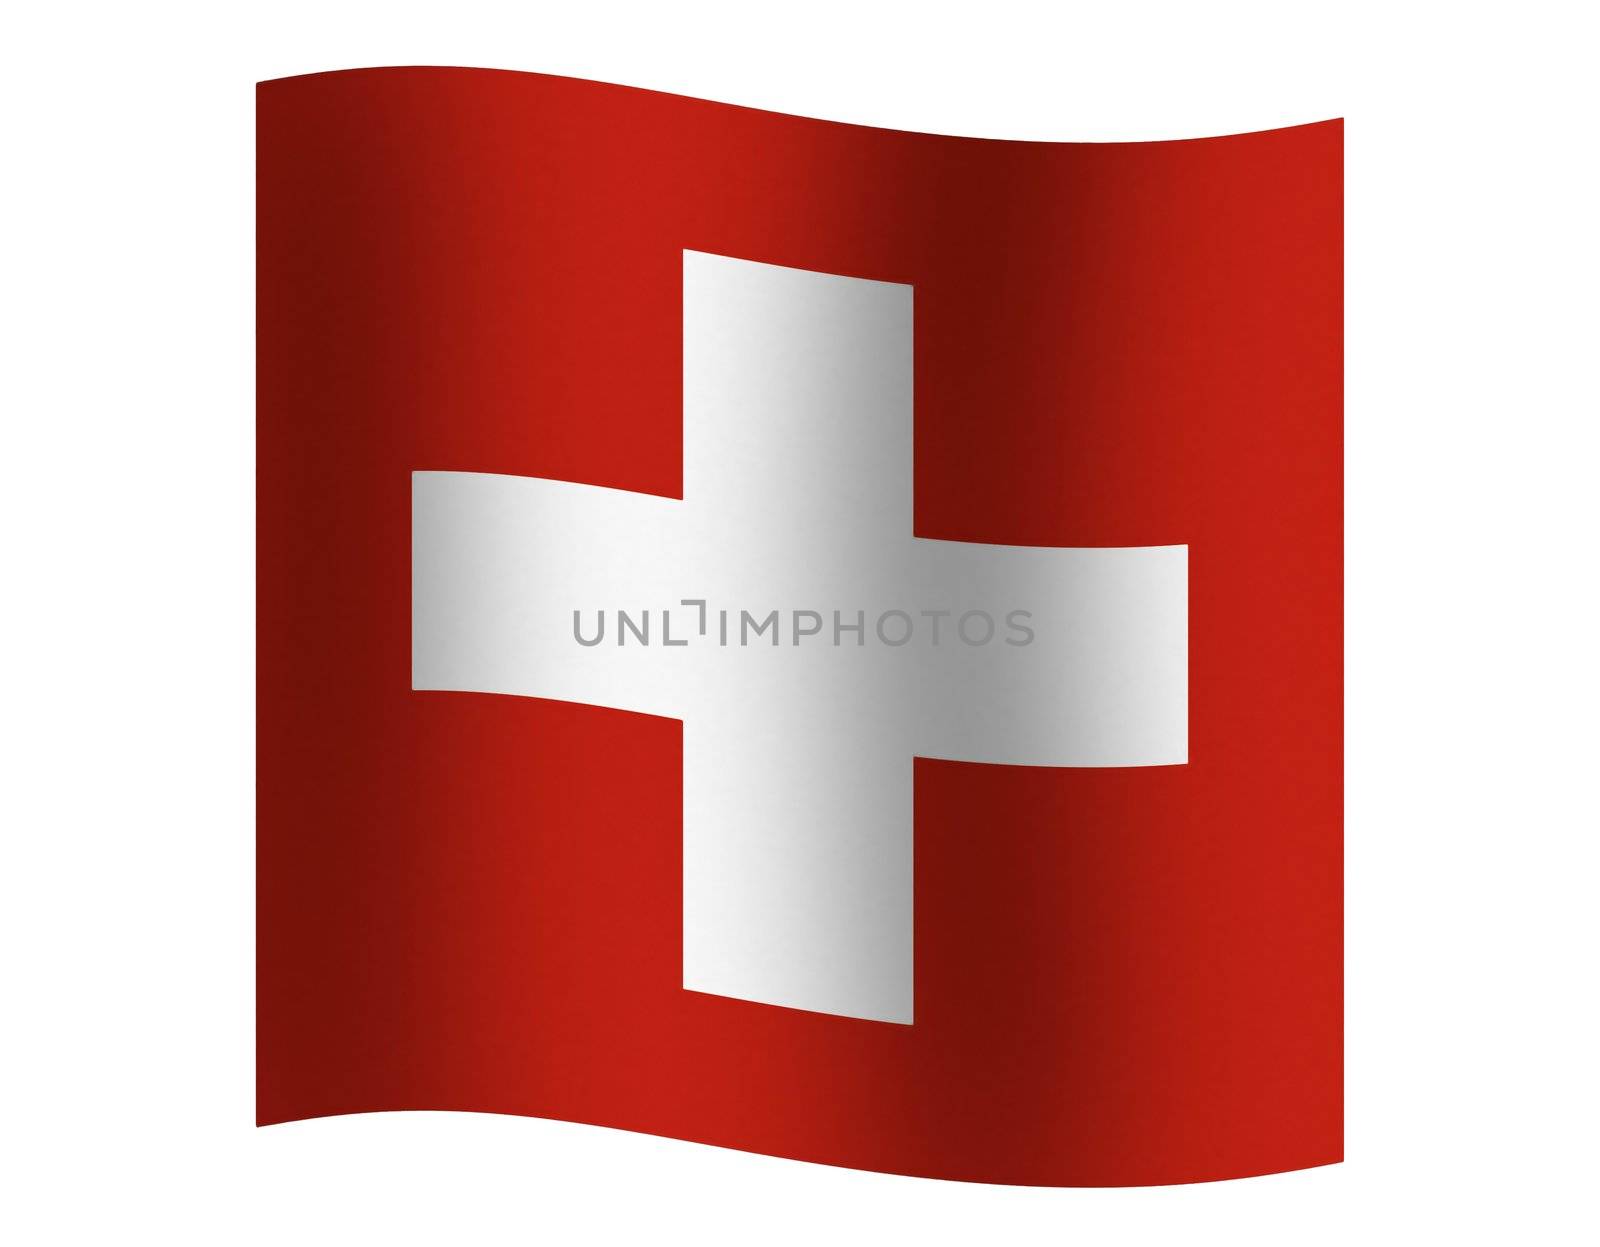 Swiss flag waving in the wind

